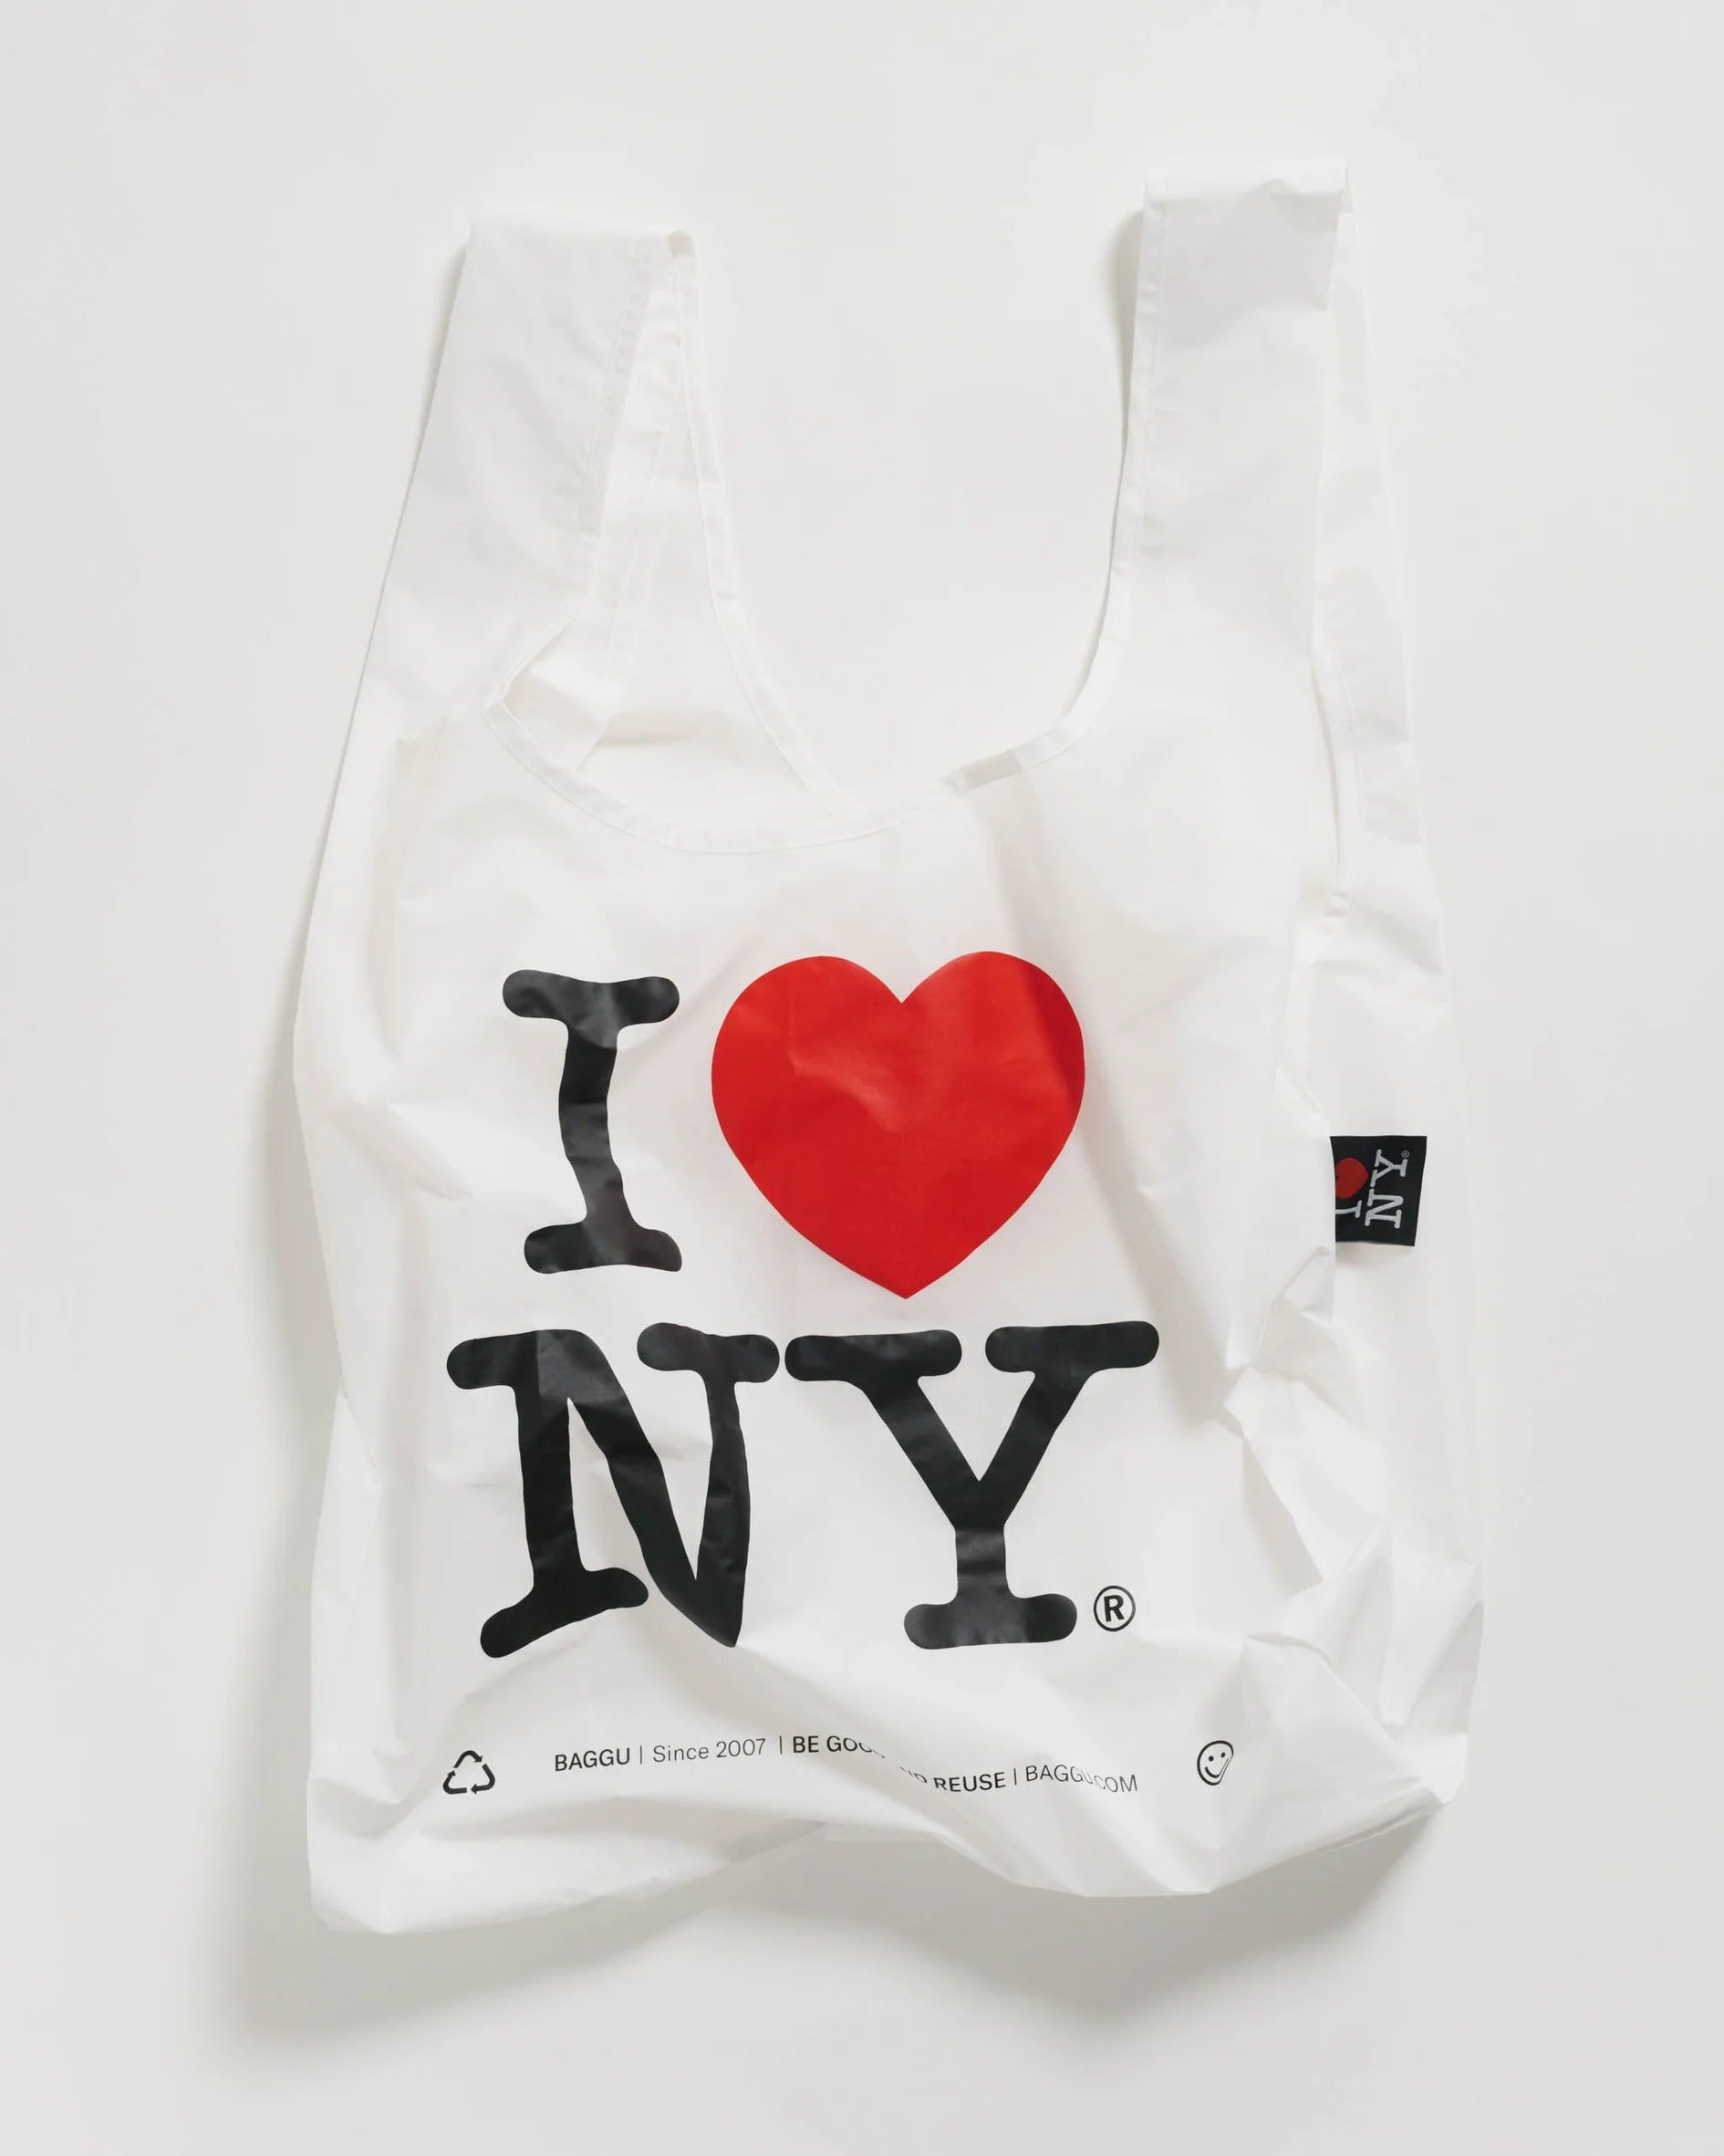 BAGGU Standard Reusable Bag in I Love NY pattern